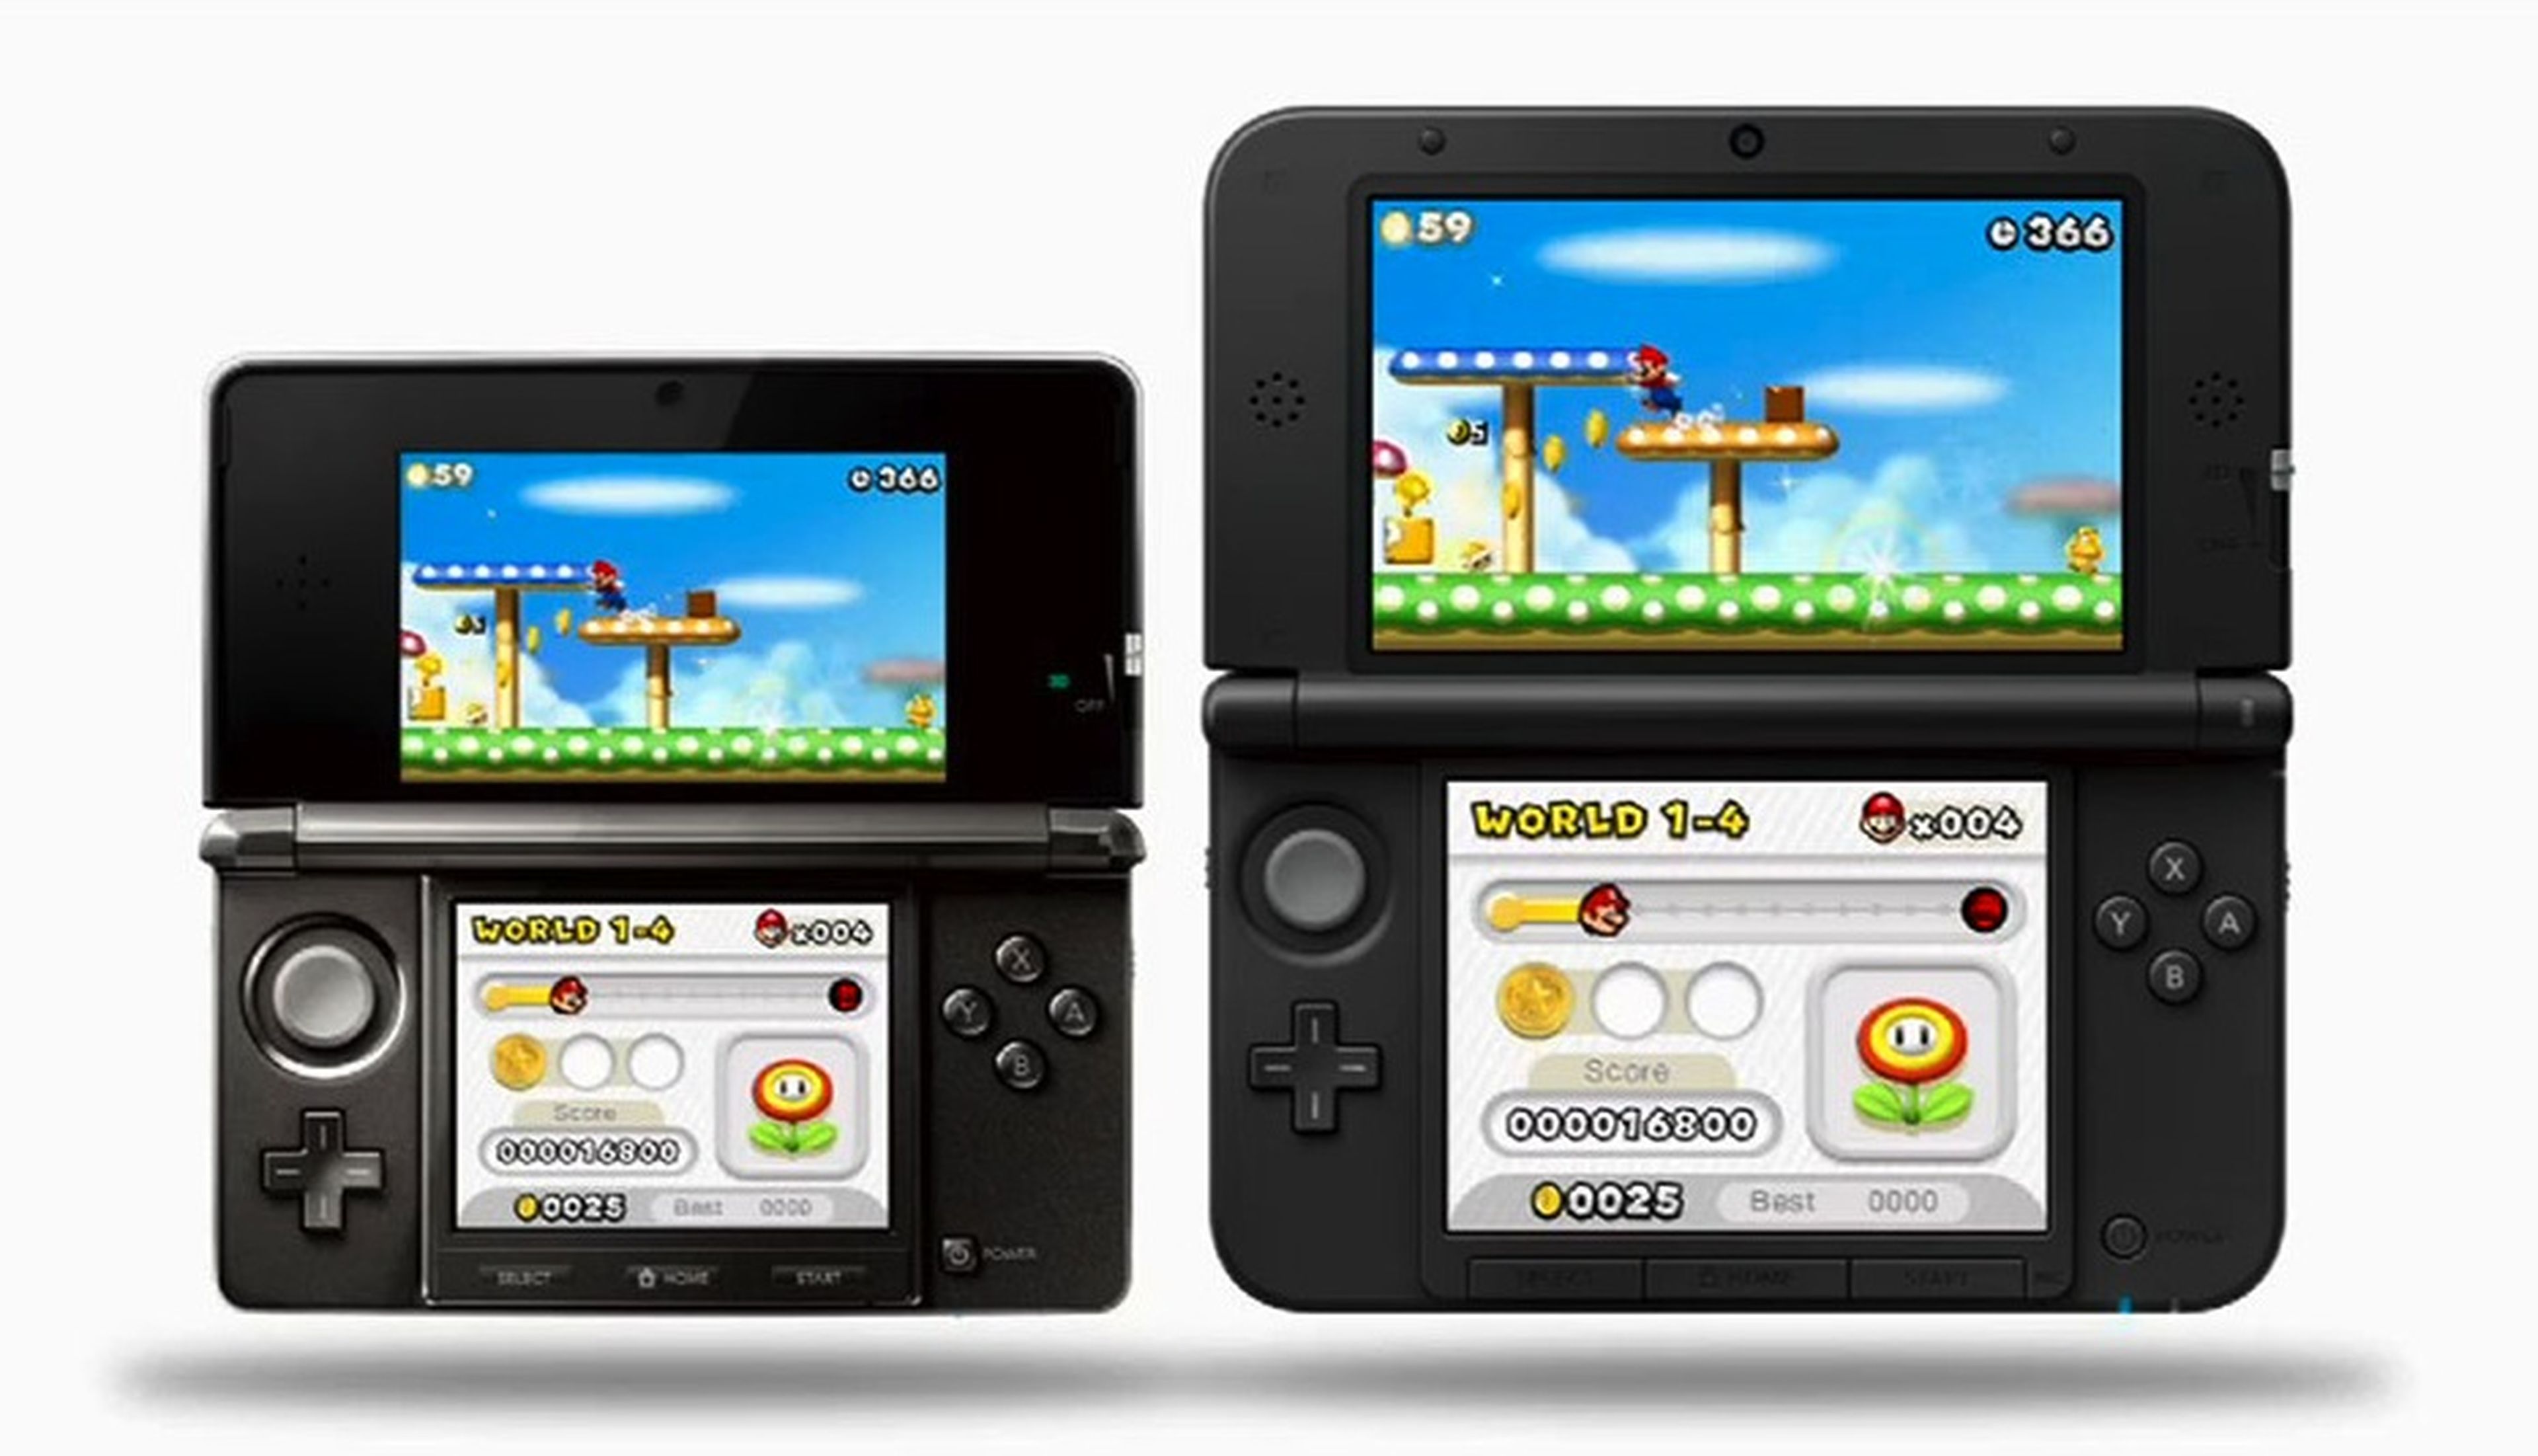 Gamelab 2012: probamos 3DS XL